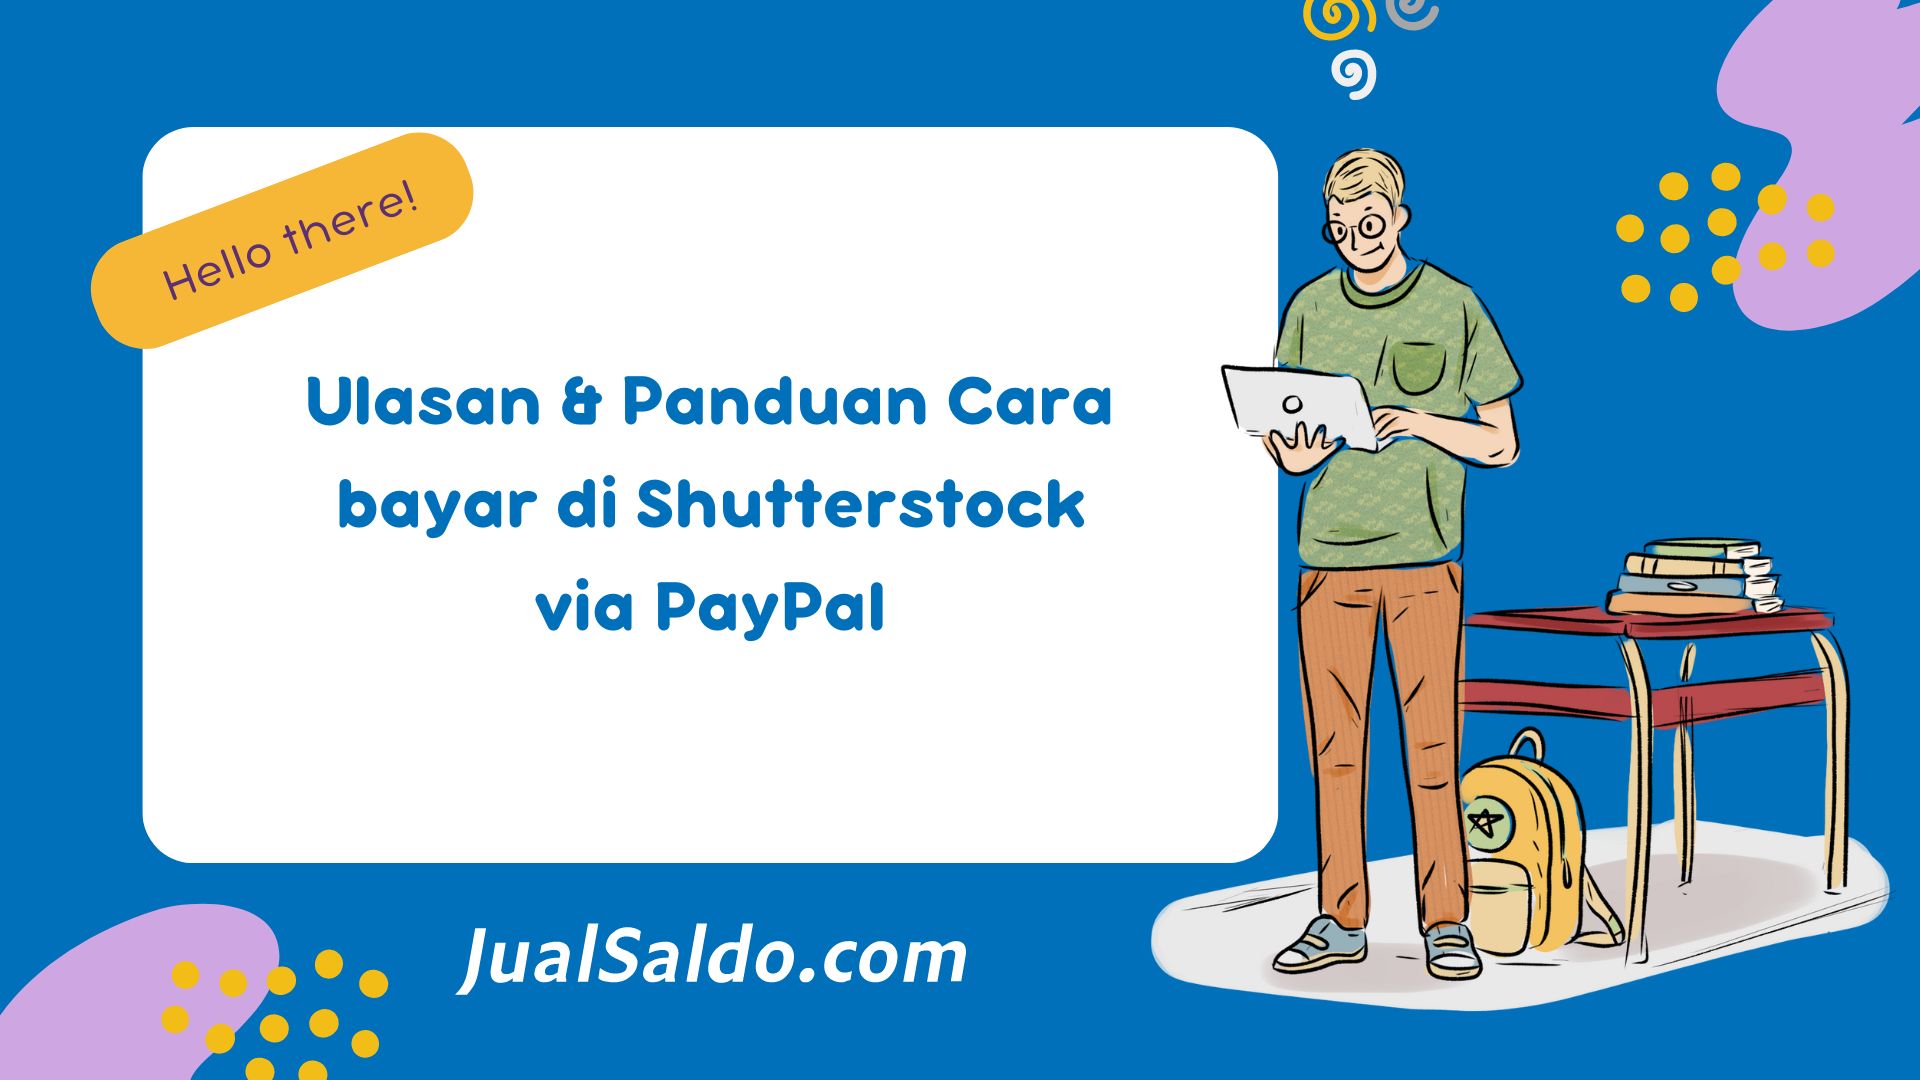 Ulasan & Panduan Cara bayar di Shutterstock via PayPal